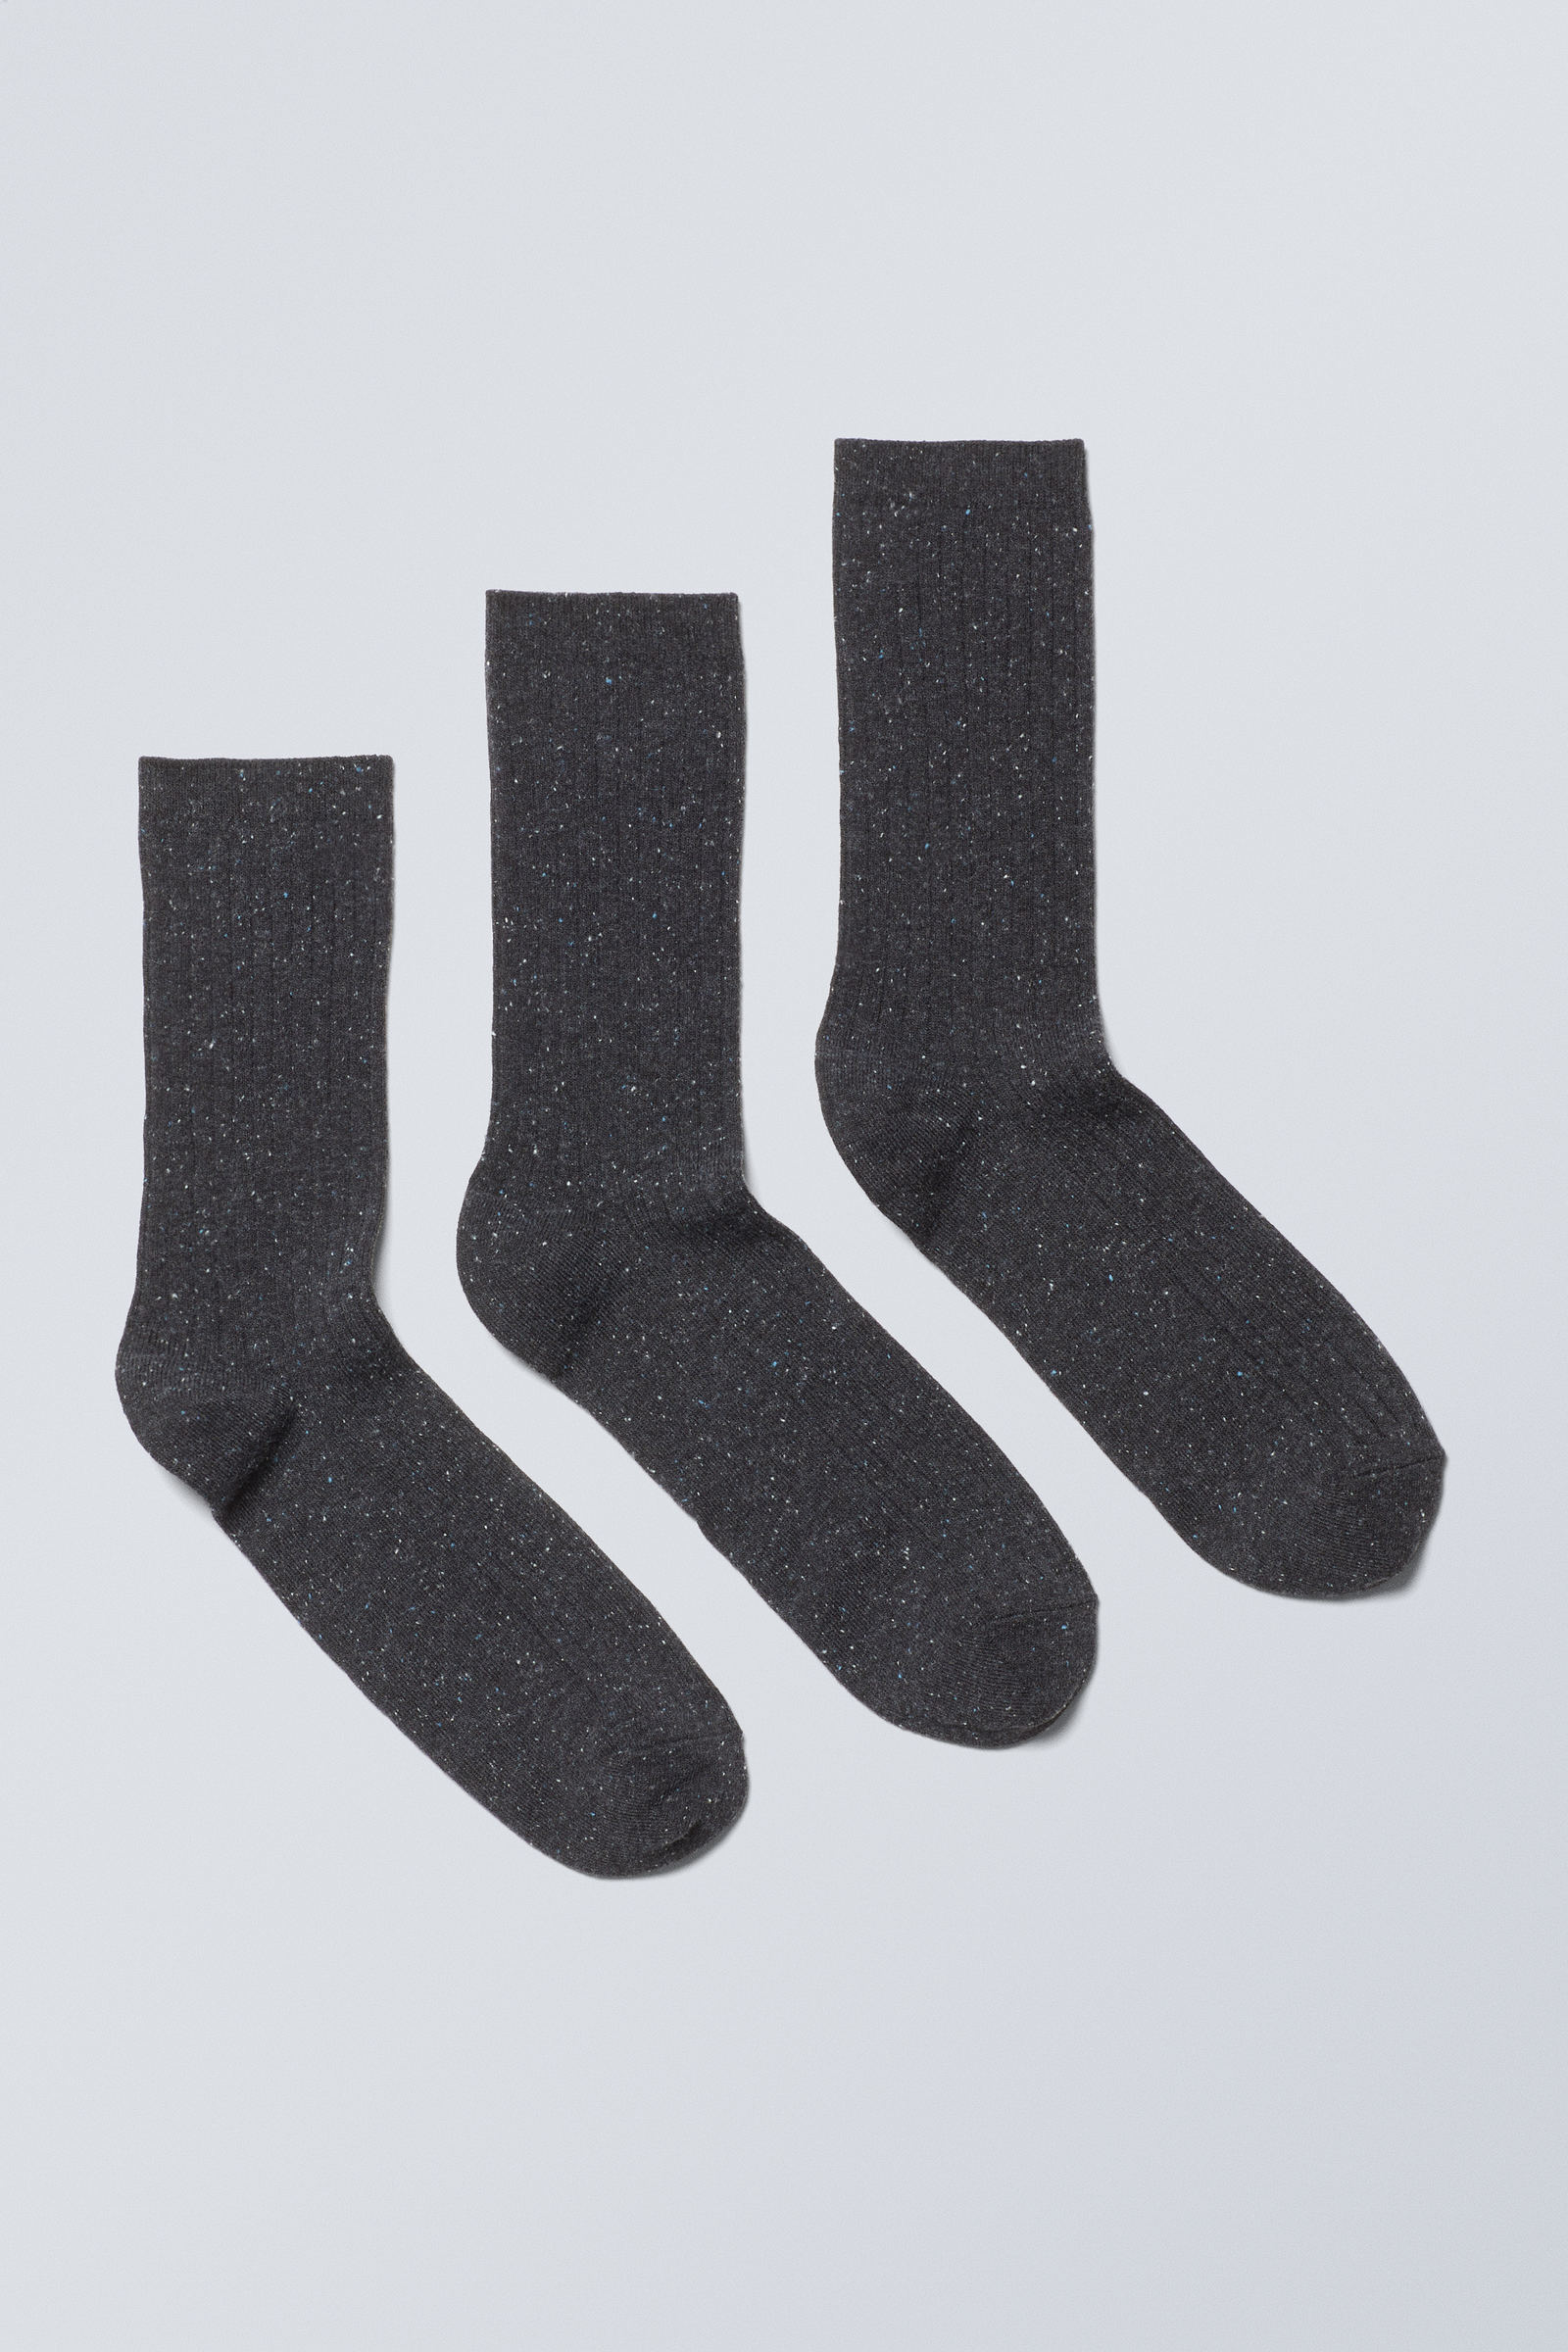 #272628 - 3pack Rib Neps Socks